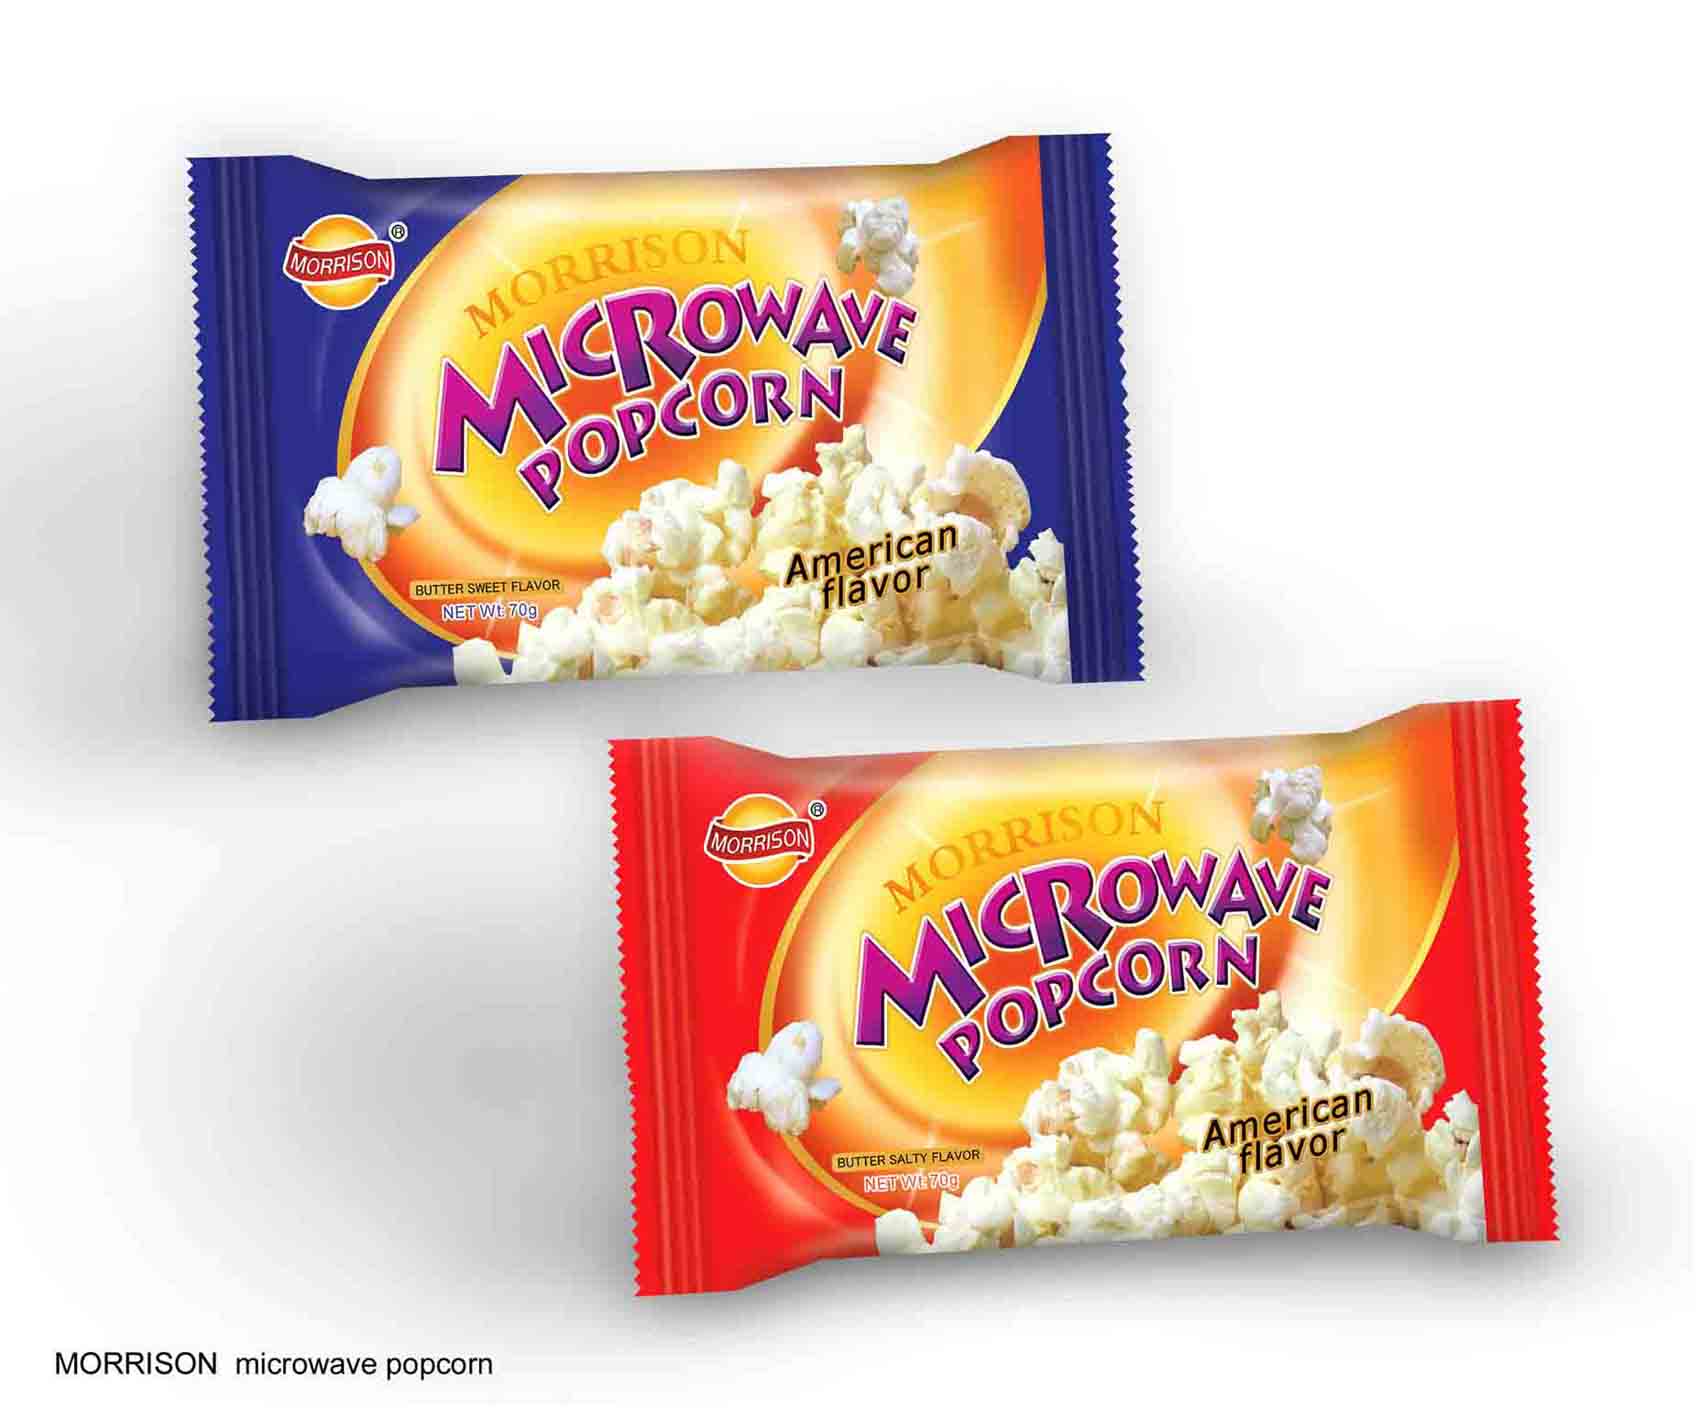  Microwave Popcorn (Microwave Popcorn)